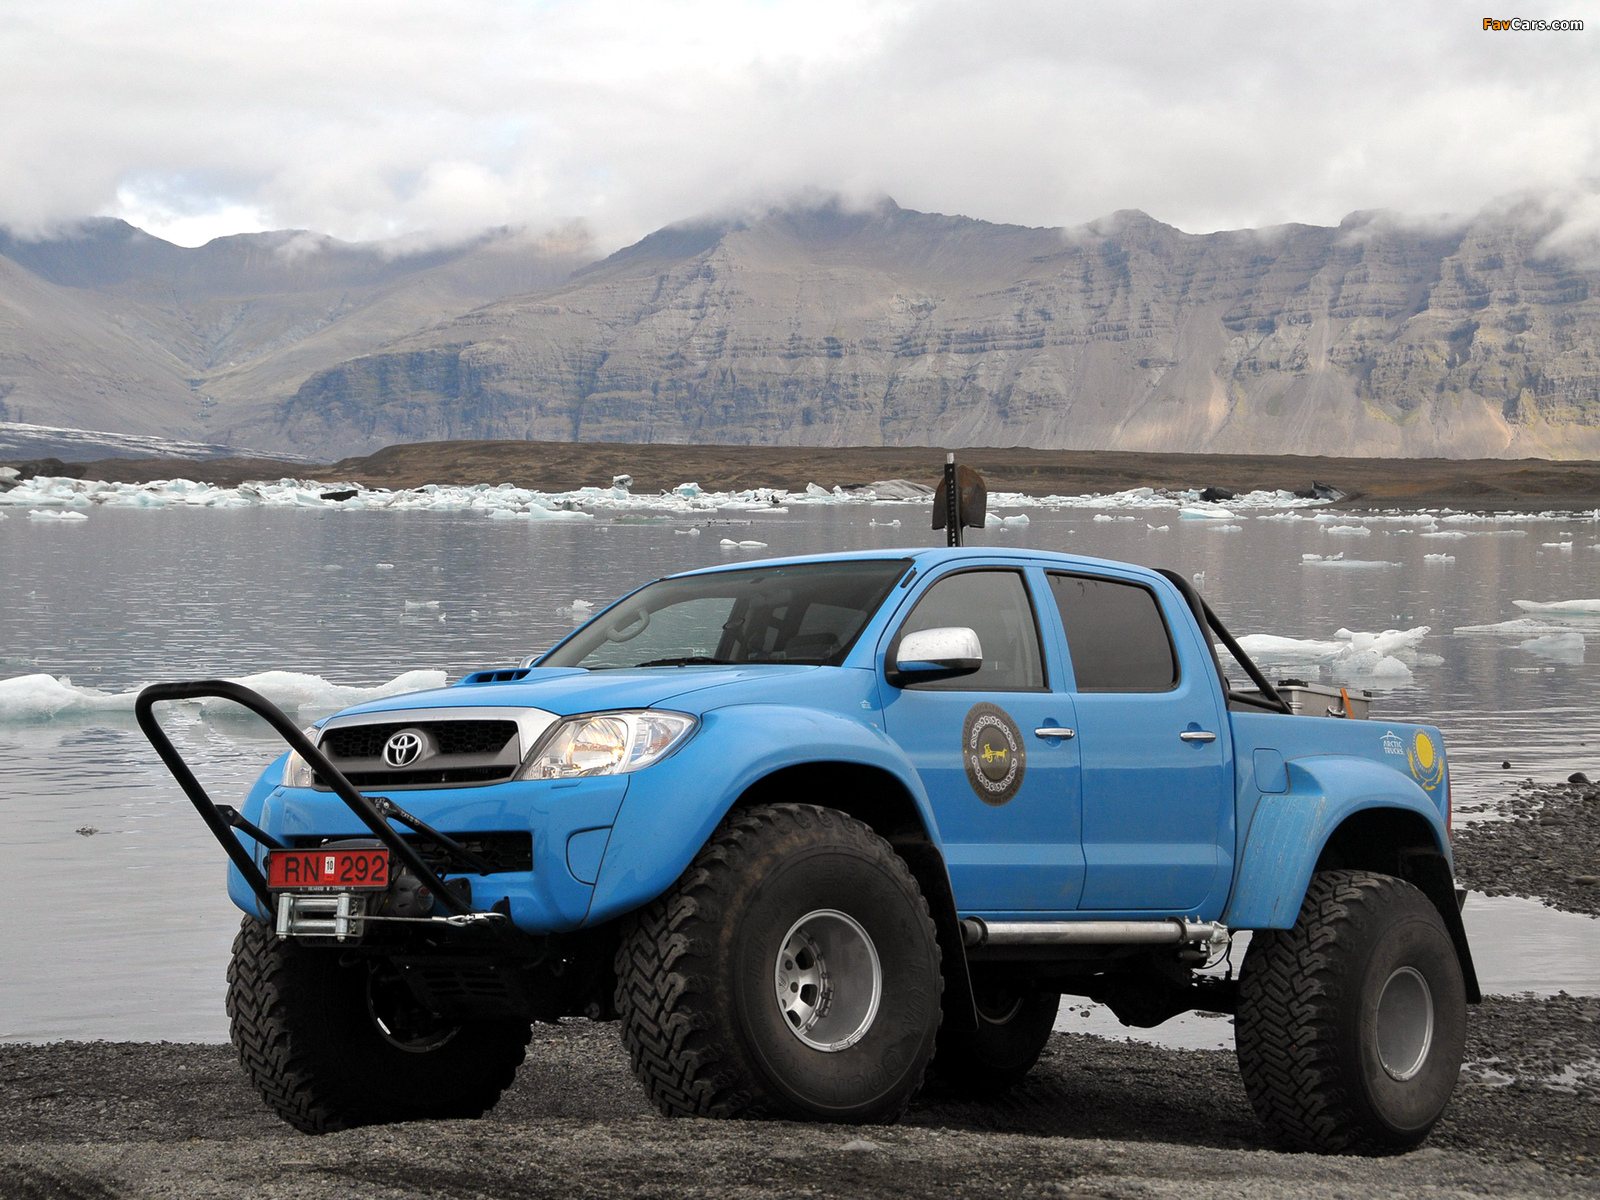 Arctic Trucks Toyota Hilux AT44 2007 photos (1600 x 1200)